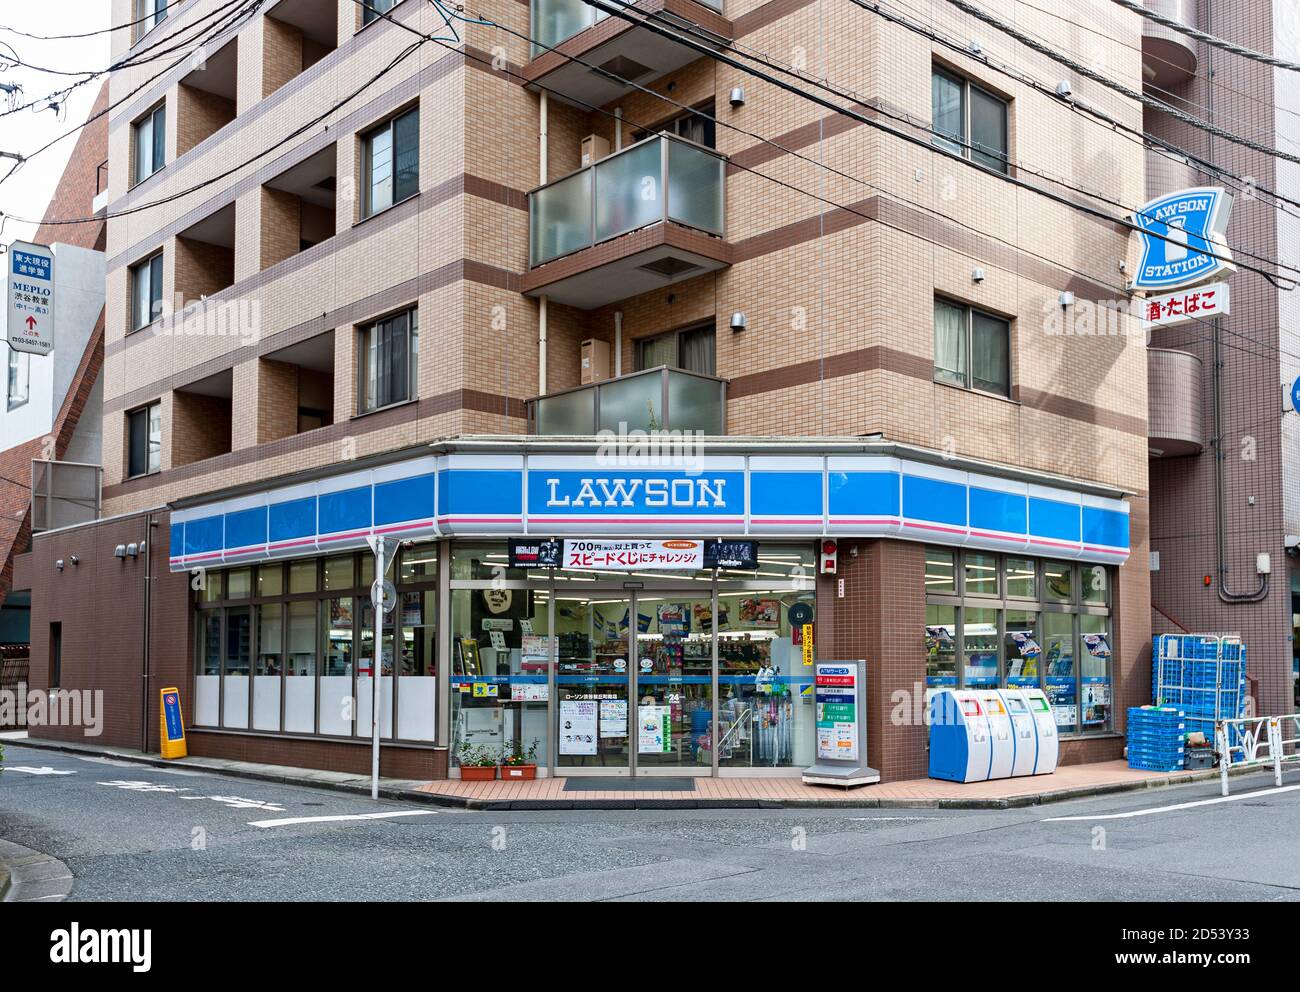 Lawson Conbeni, Convenience Store, Japan Stock Photo